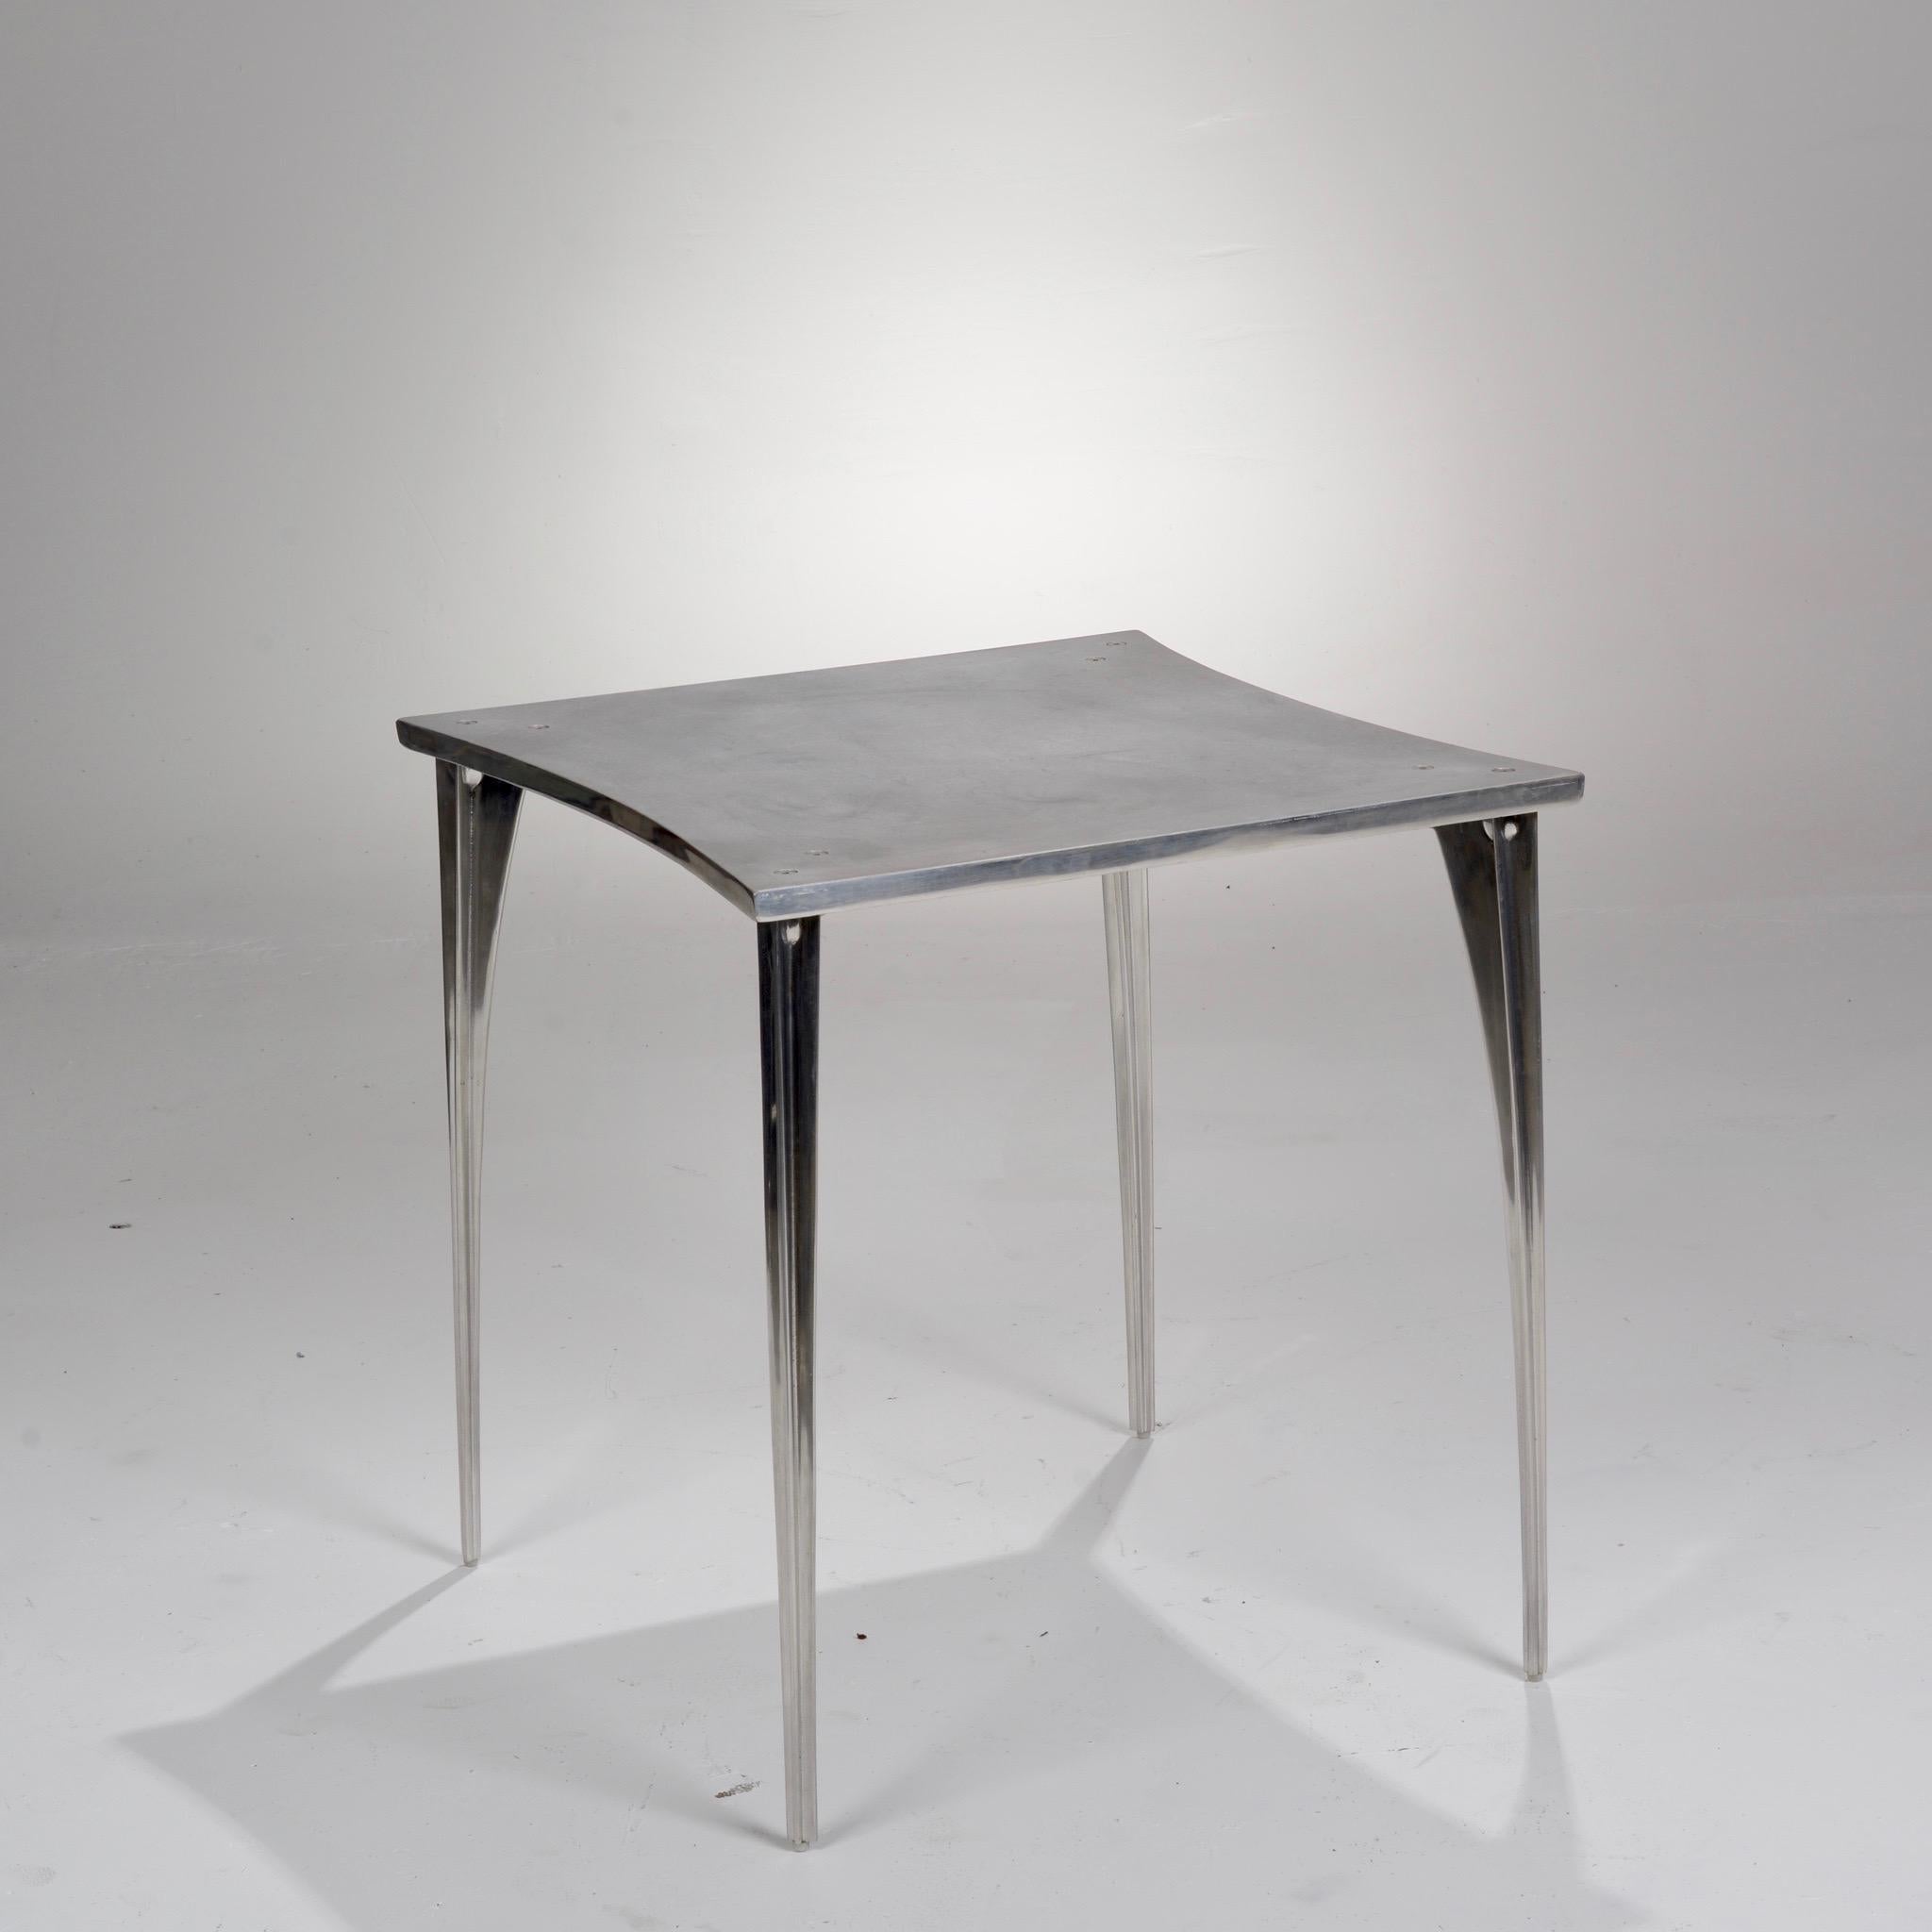 Table en aluminium moulé à la main de Robert Jostens, 2 en stock.